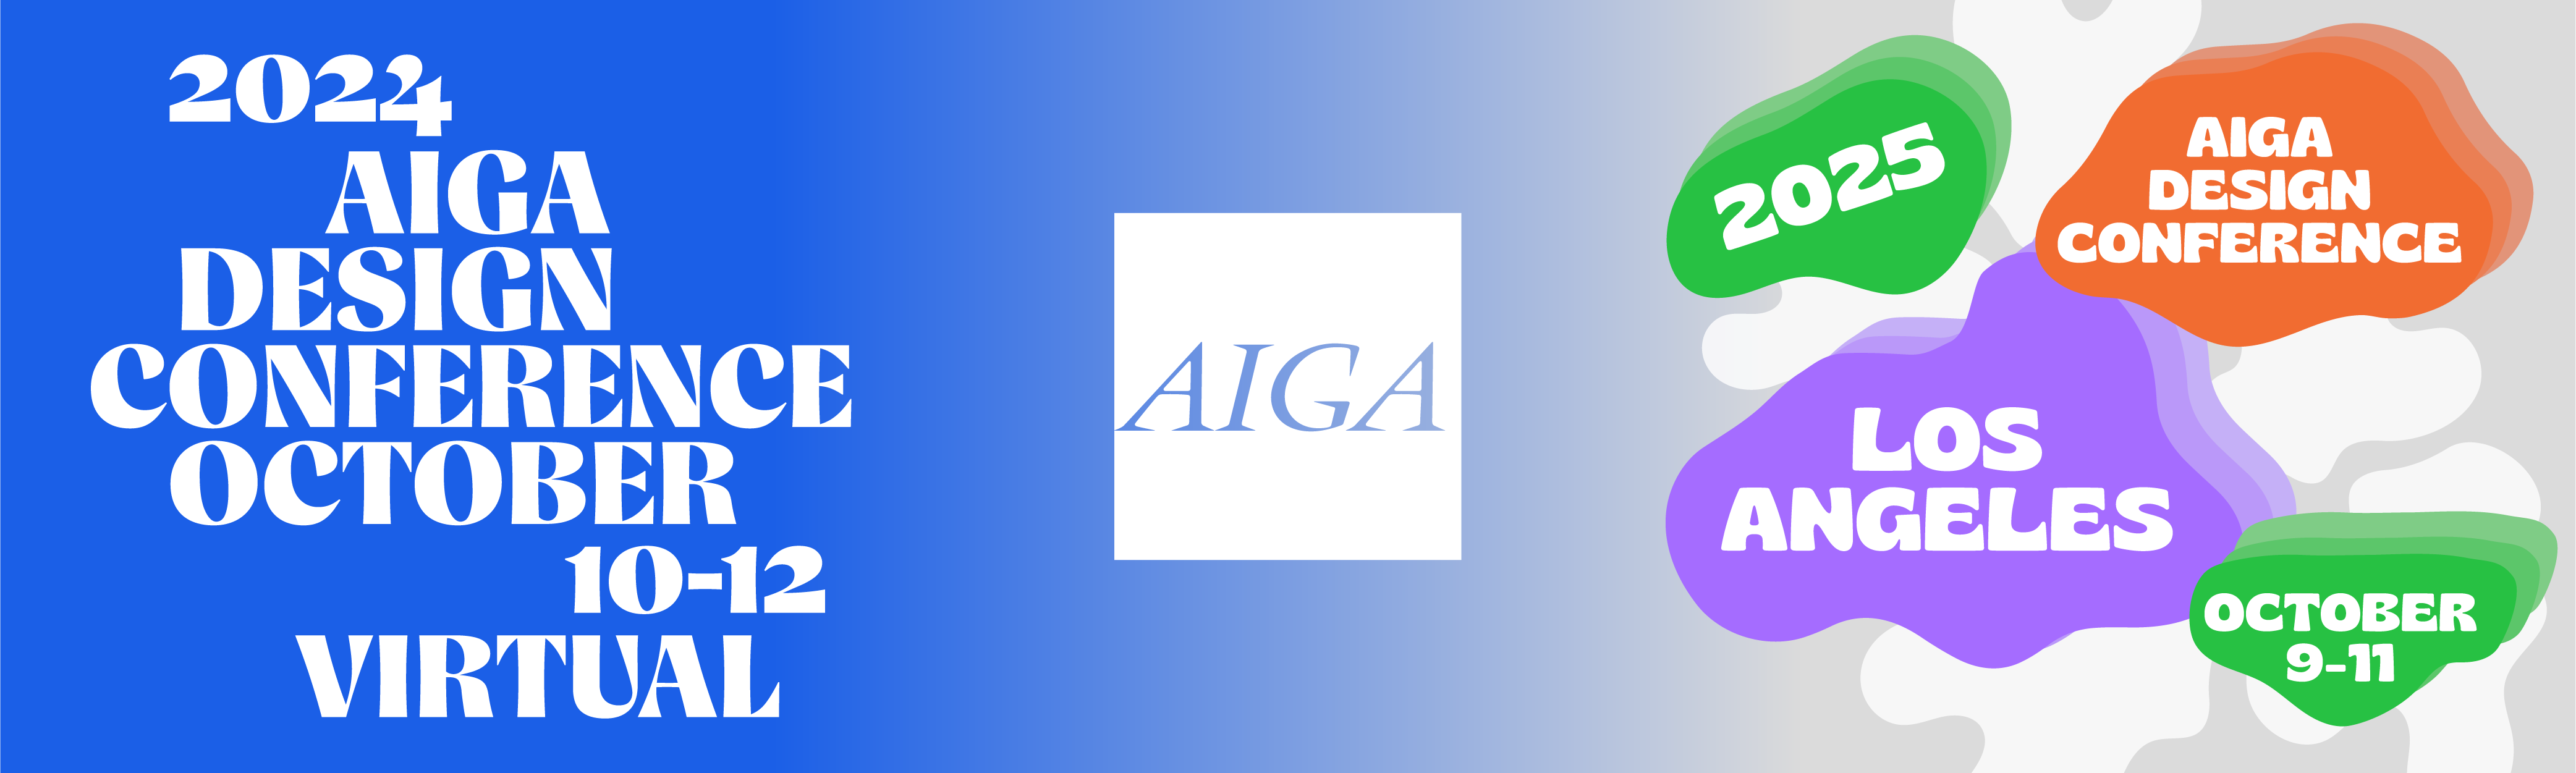 AIGA Design Conference Logo